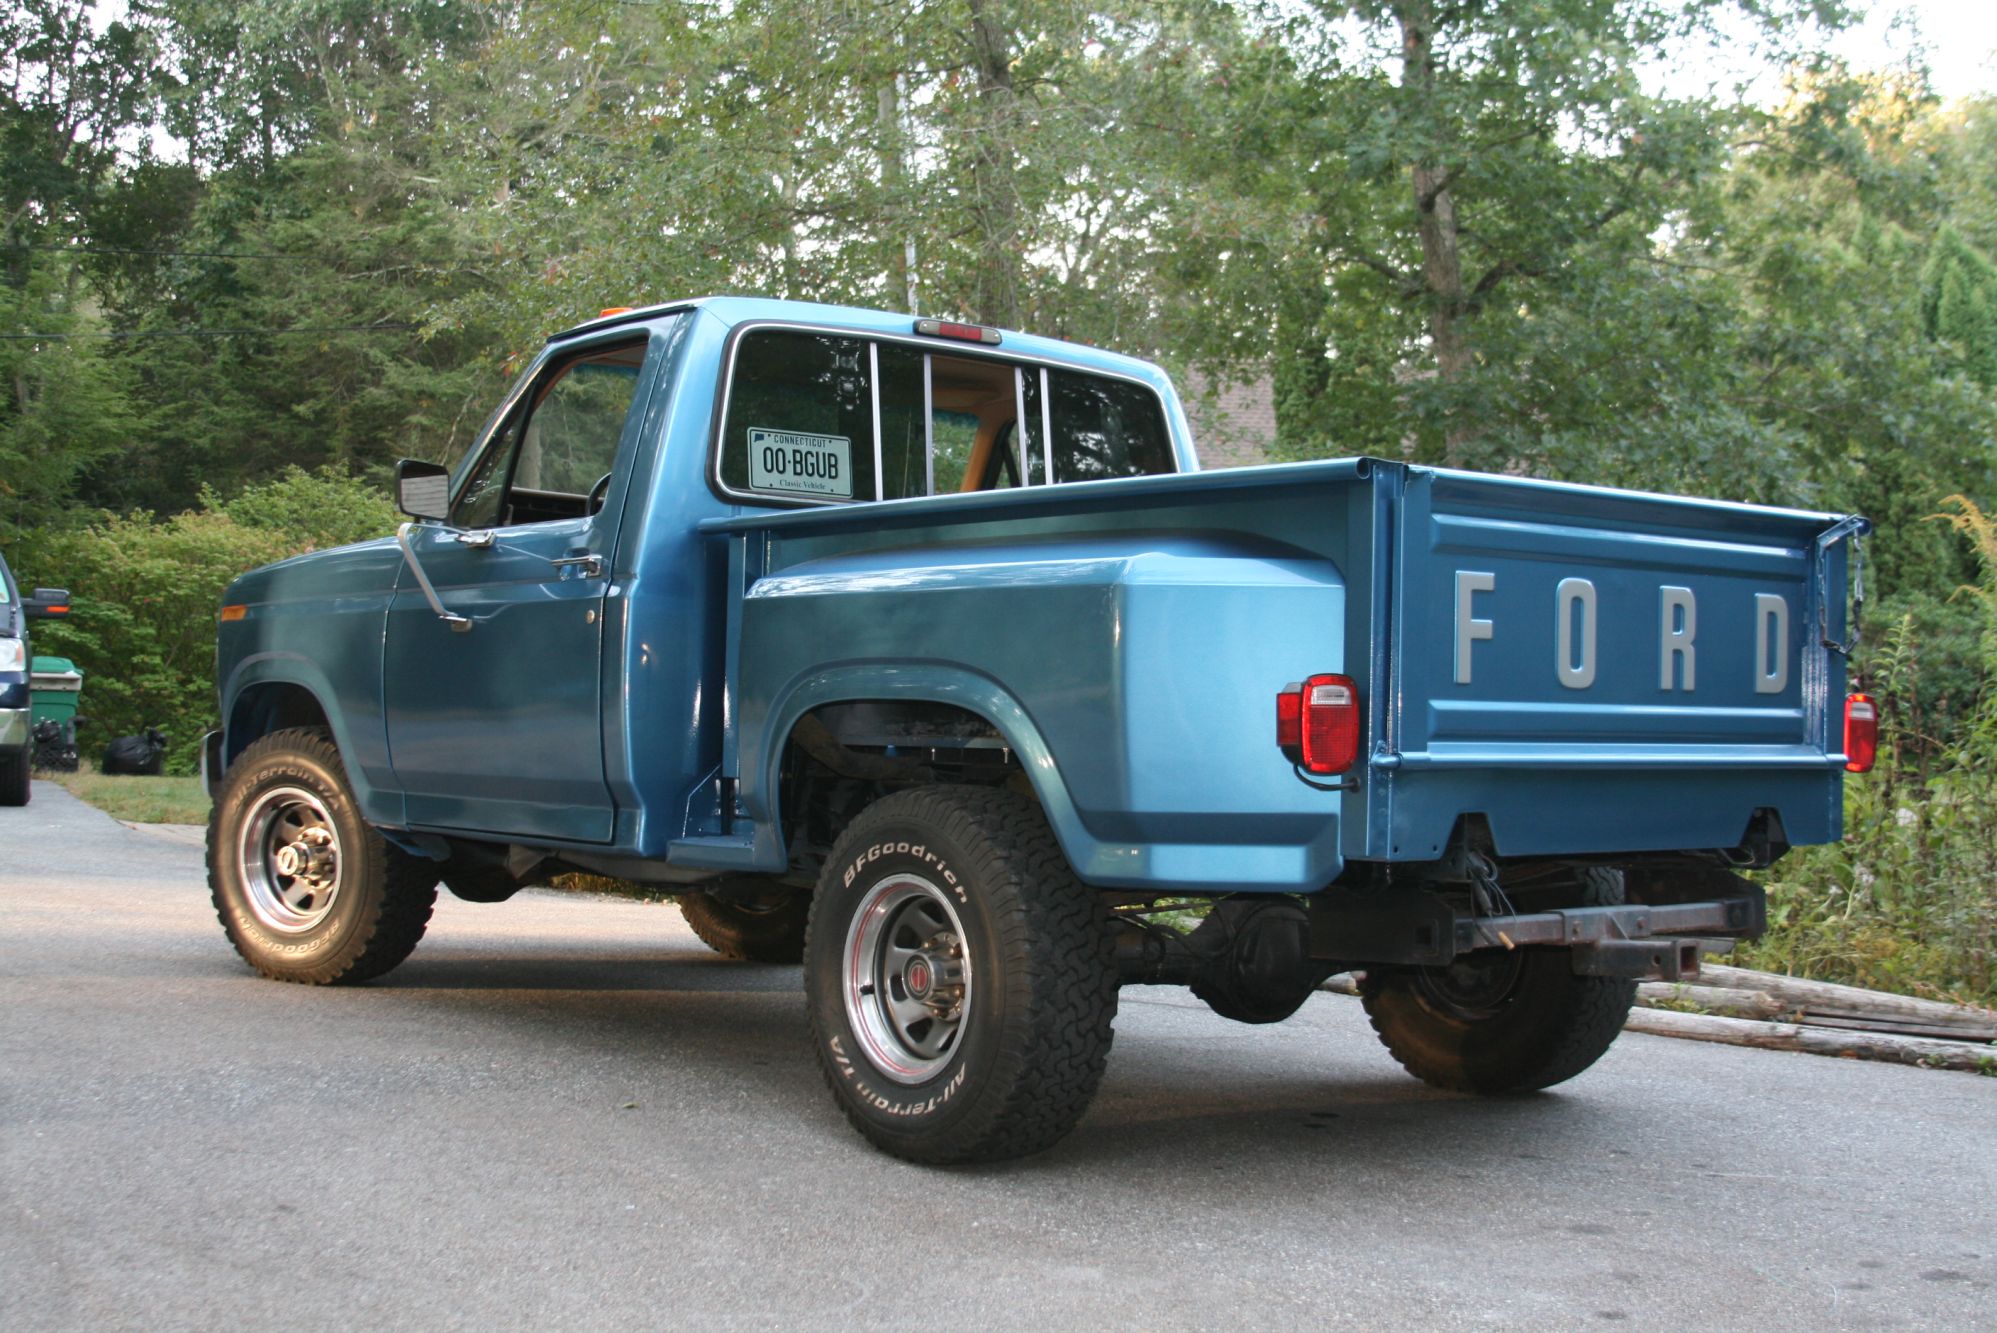 Big, Boss Boxes: Ford Trucks of the 1980s  FordTrucks.com